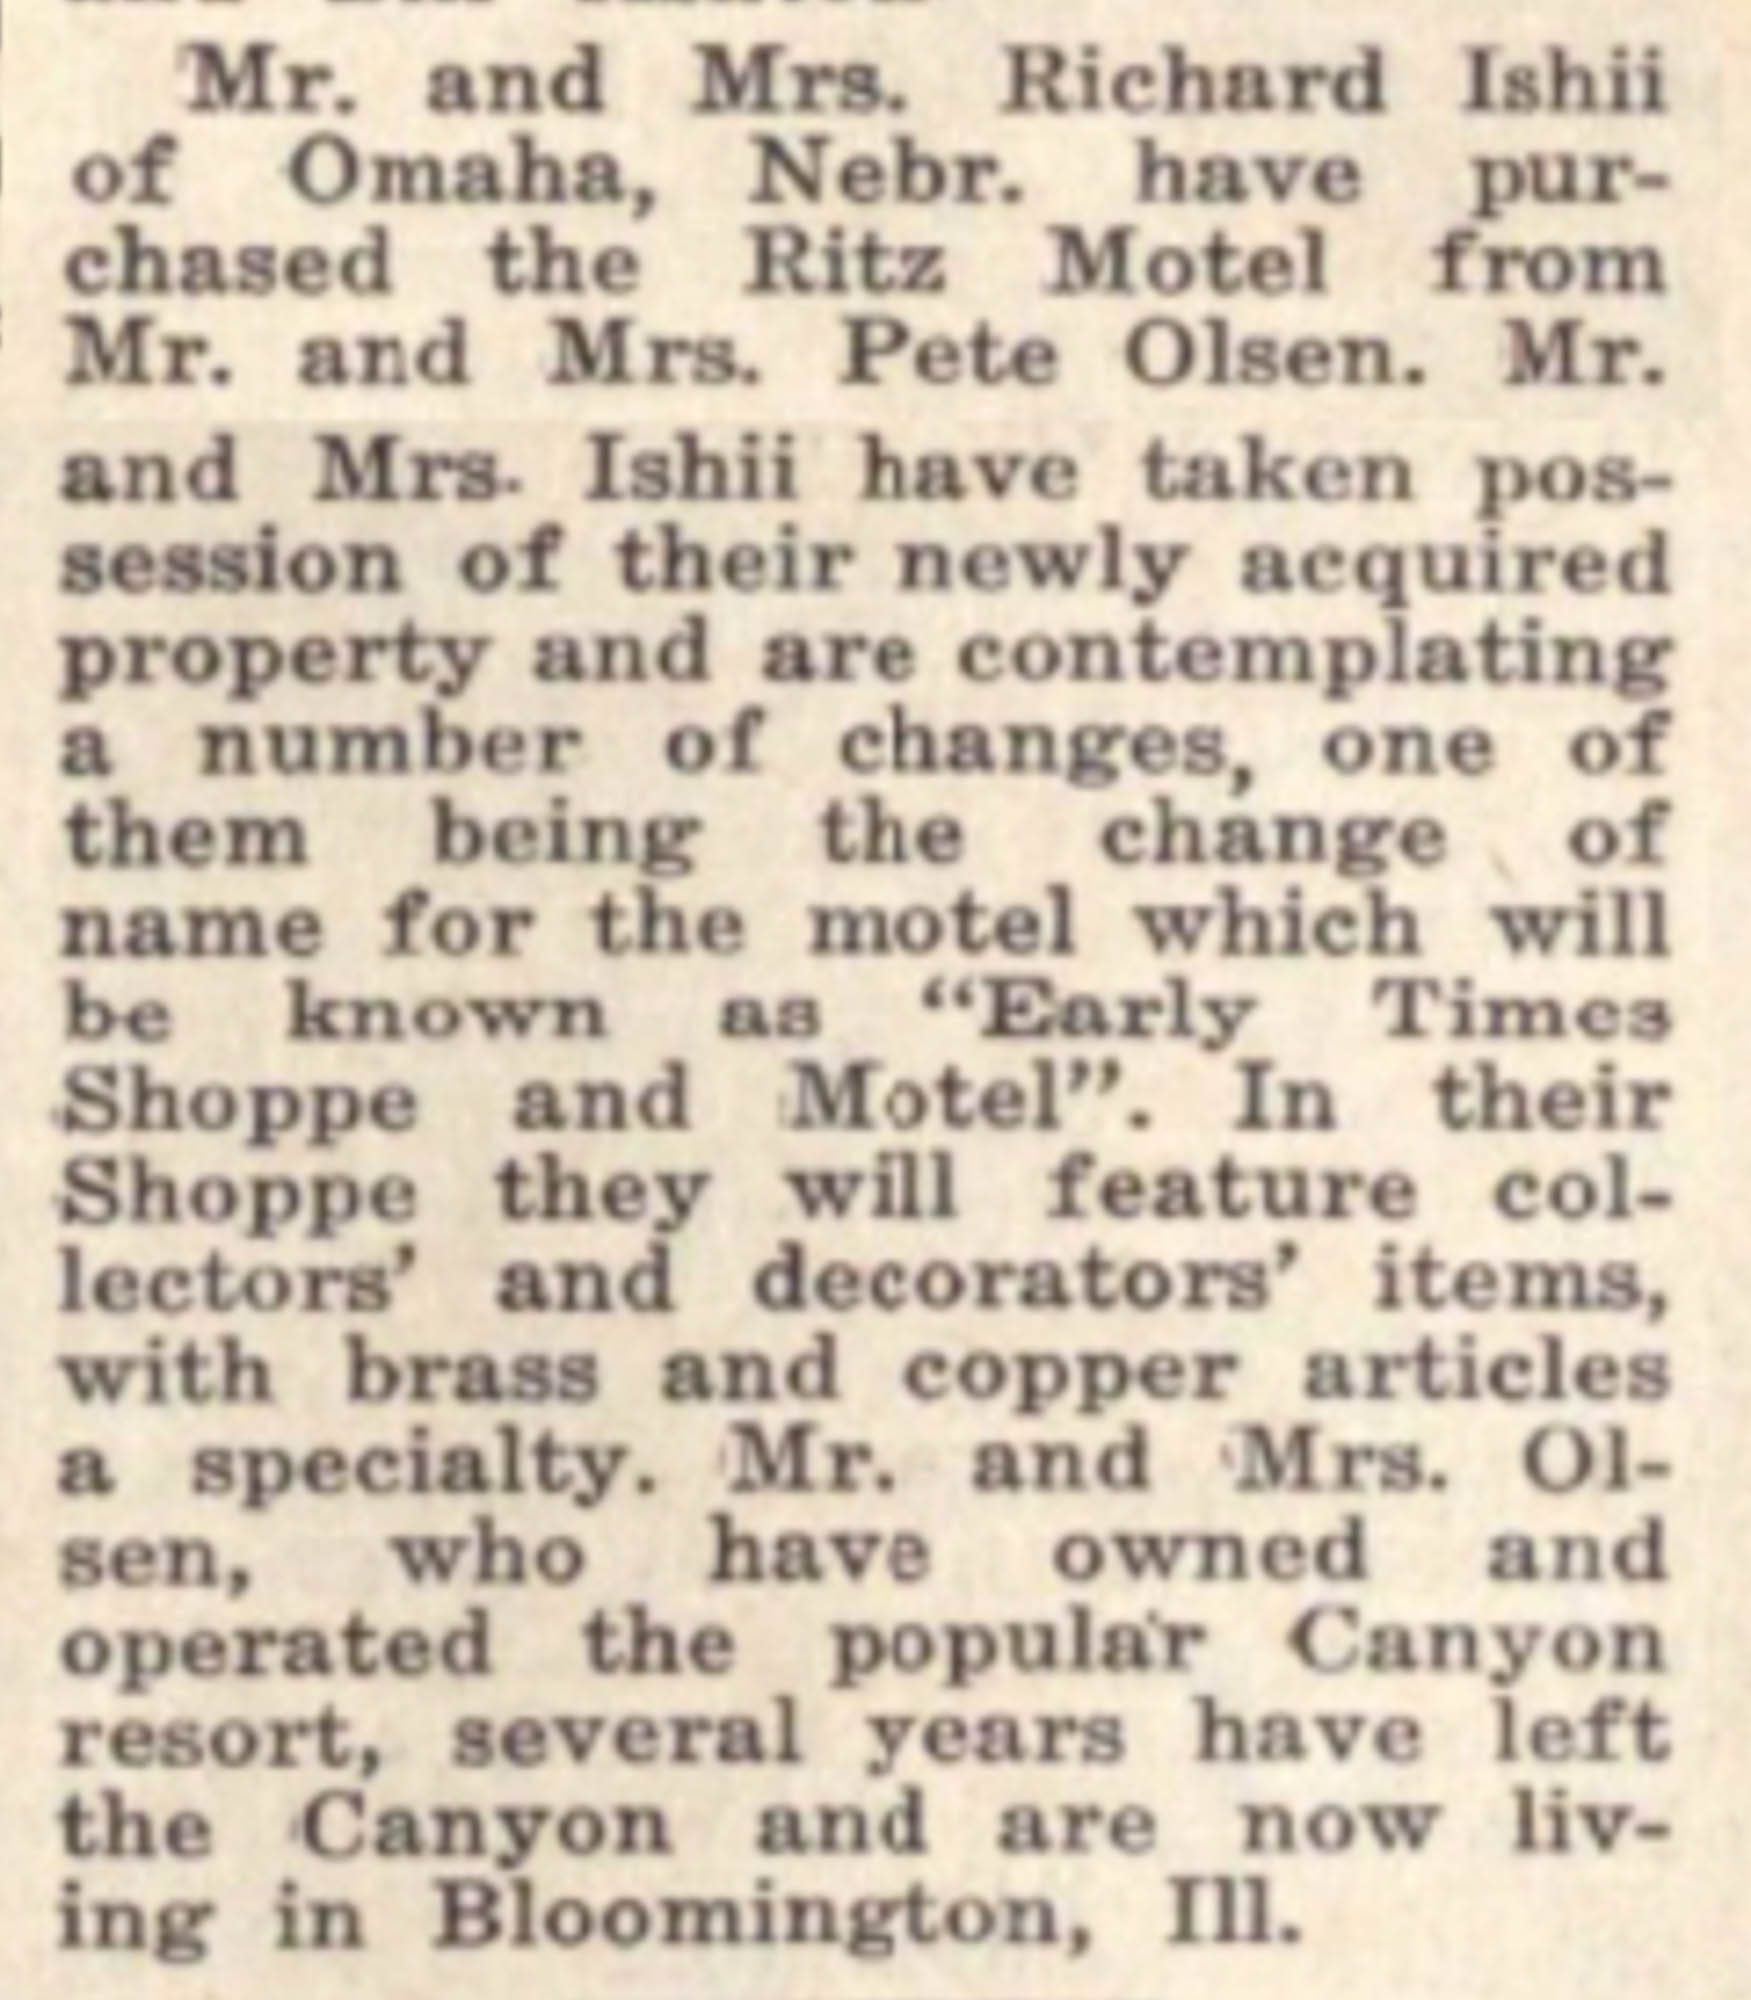 Idlewild Lodge - idlewildlodge.github.io - 1965-12-24 - The Estes Park Trail - Ritz Motel Renamed to Early Times Motel